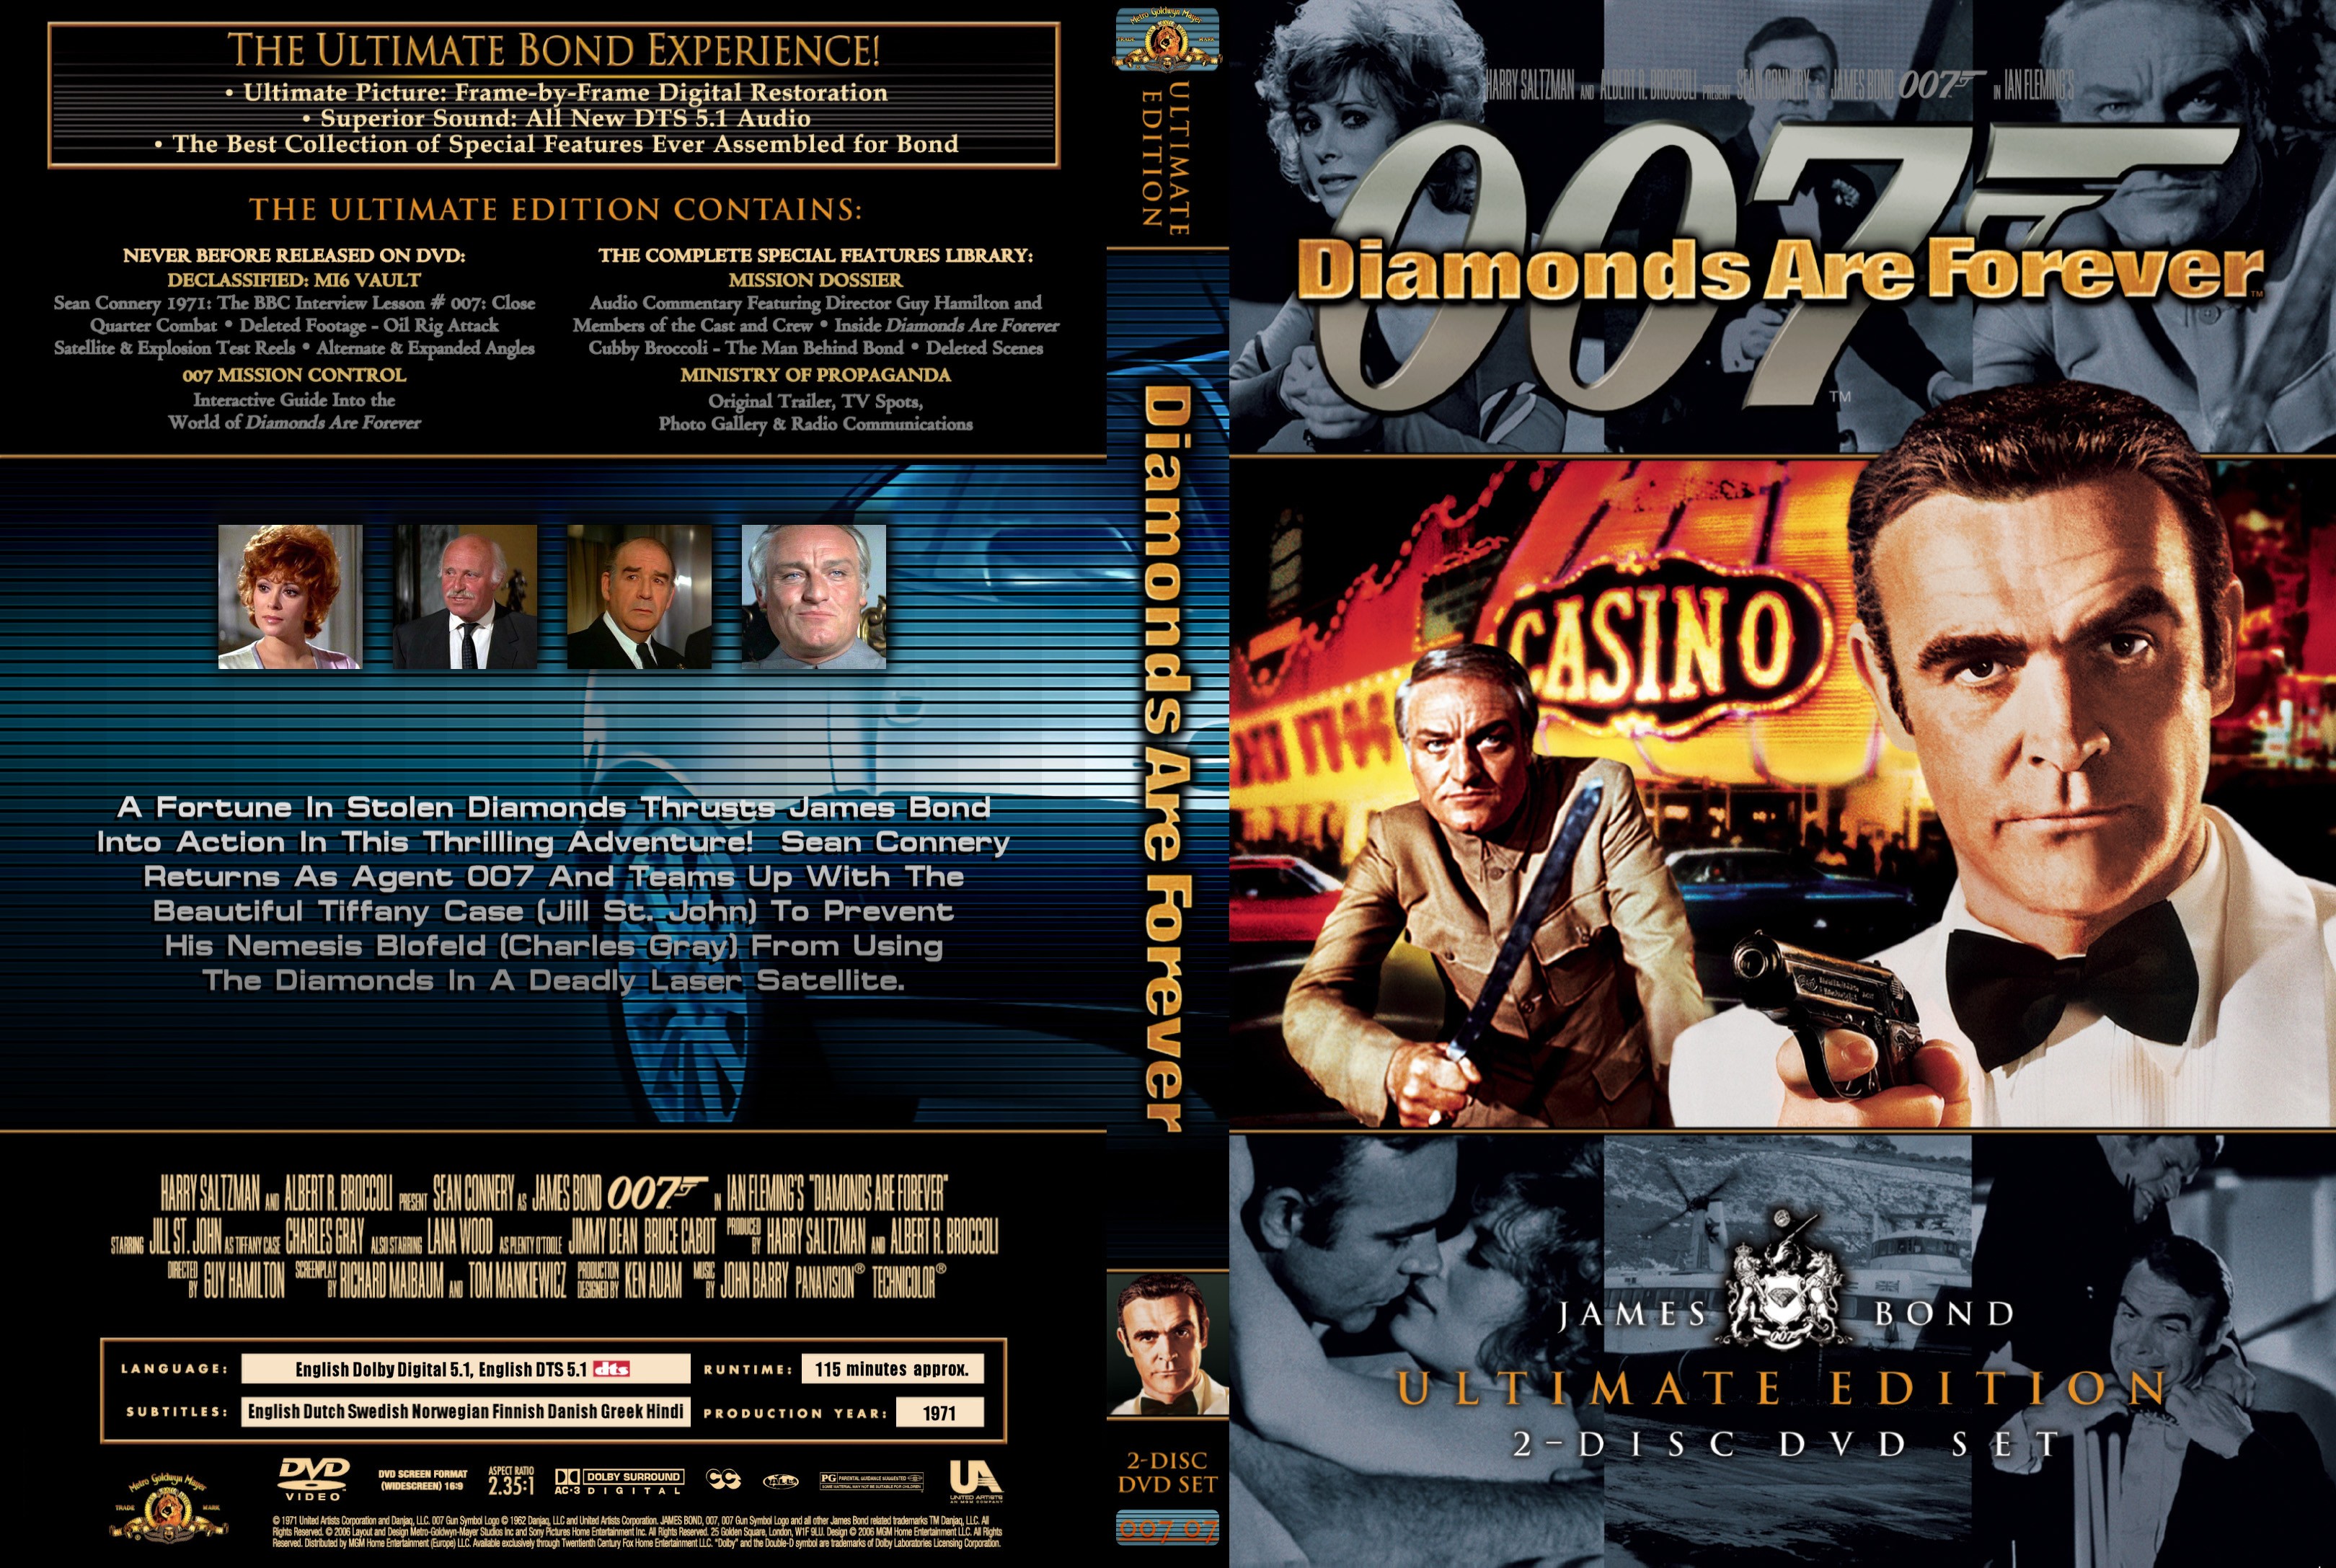 James Bond - 007 Complet... - James Bond H 007-07 Diamenty są wieczne - Diamonds Are Forever 1971.12.14 DVD ENG.jpg